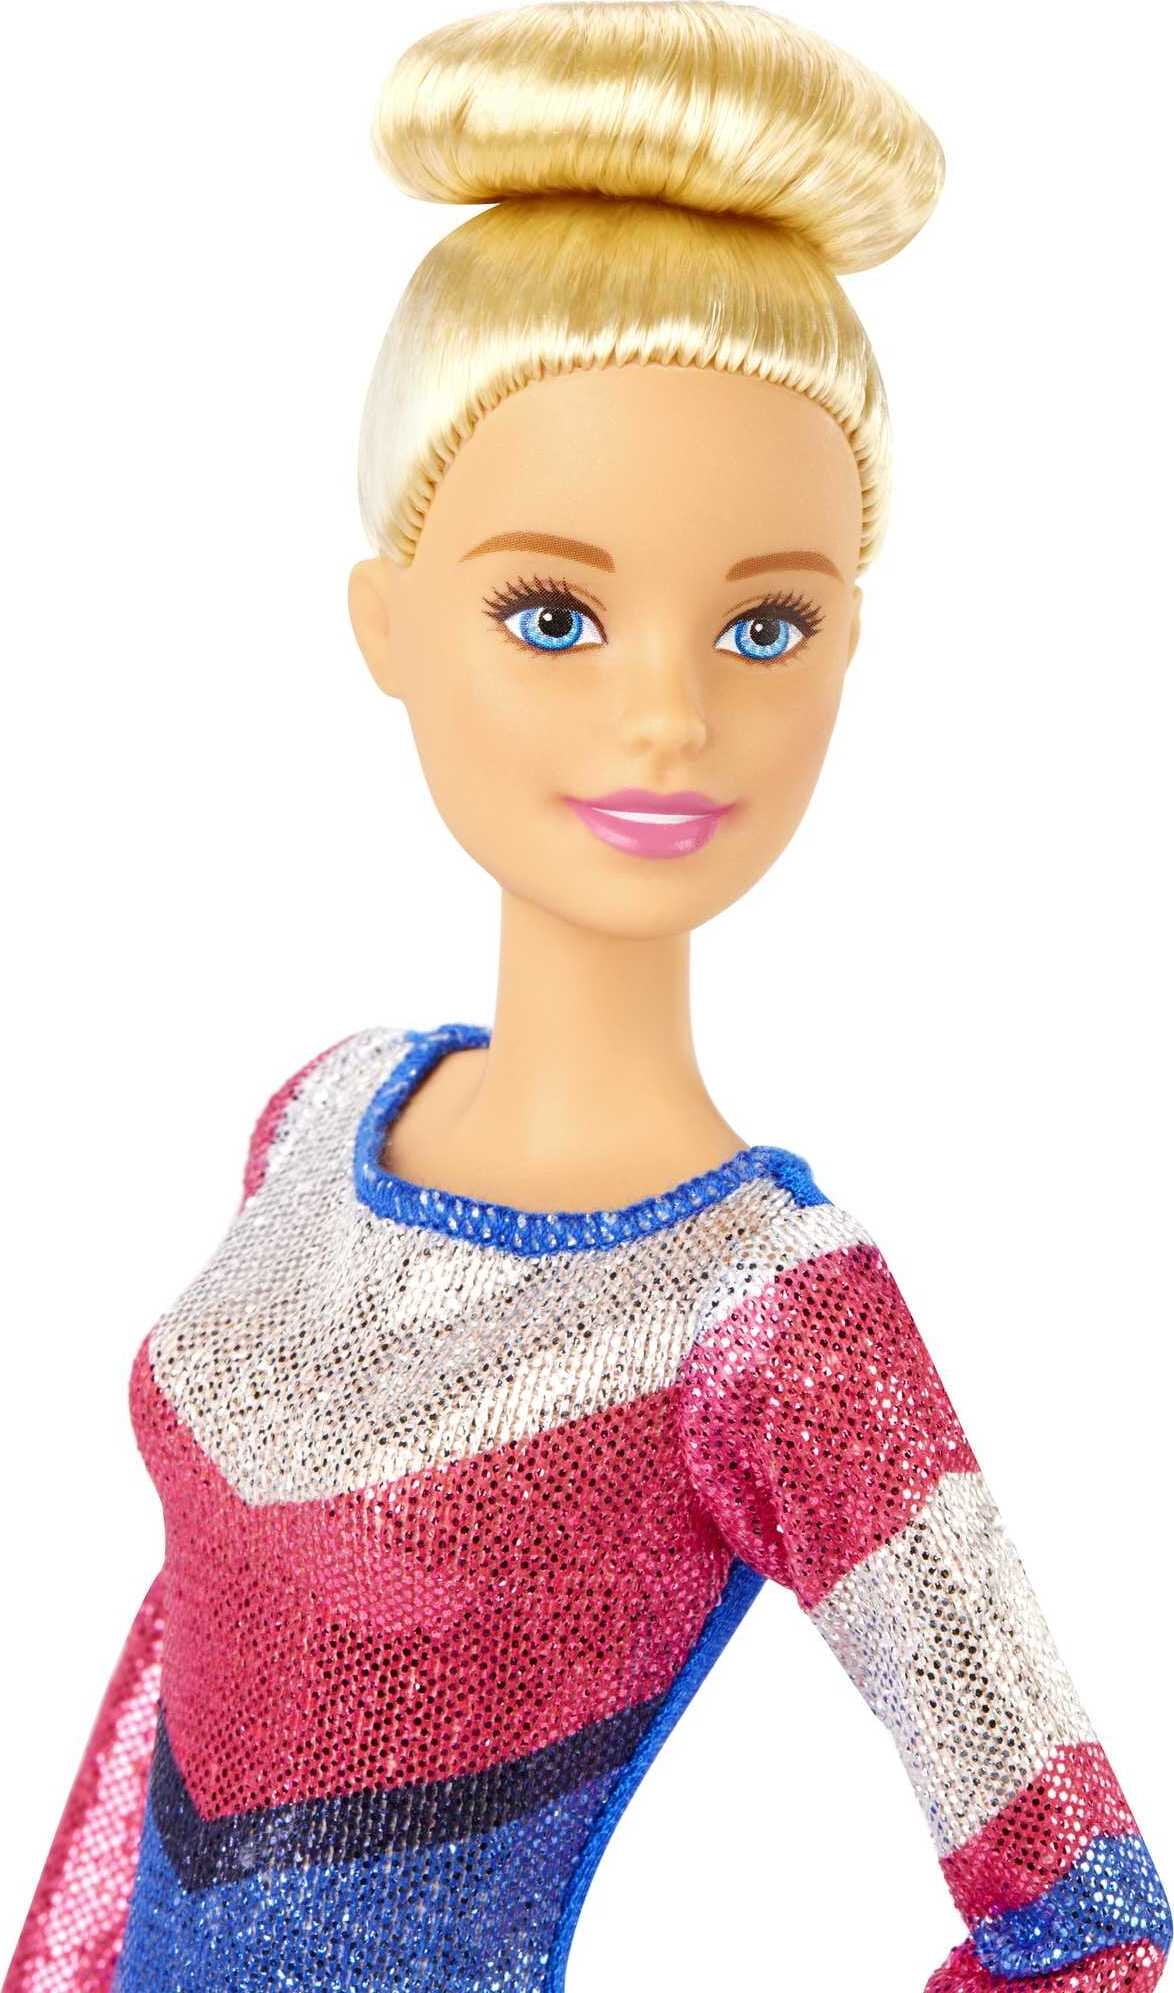 Barbie Gymnastic Dolls & Accessories, Flippin' Fun Gymnast Playset with 2  Dolls, Balance Beam & Flipping Dismount Action